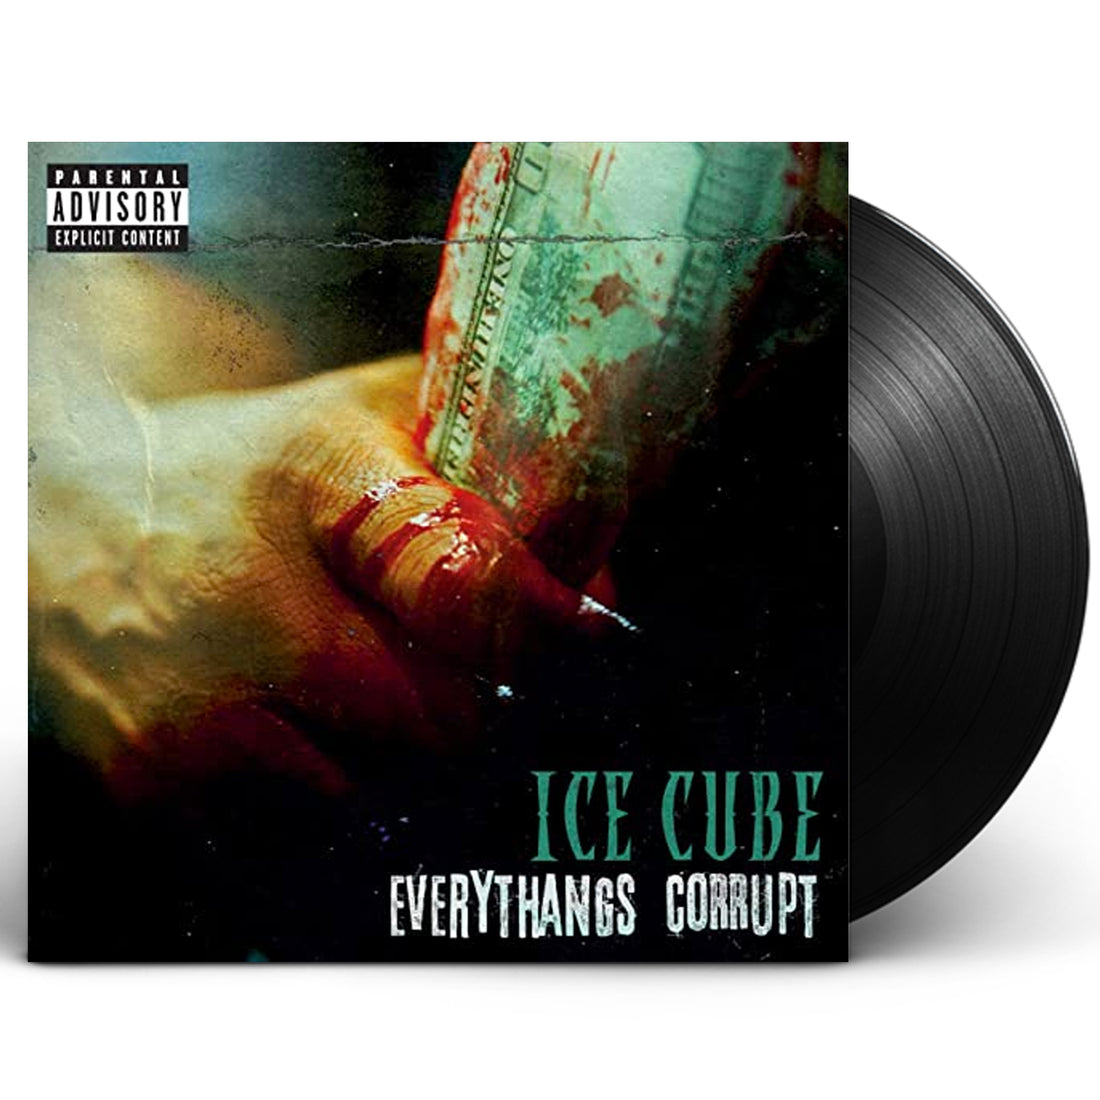 Ice Cube "Everythangs Corrupt" 2xLP Vinyl